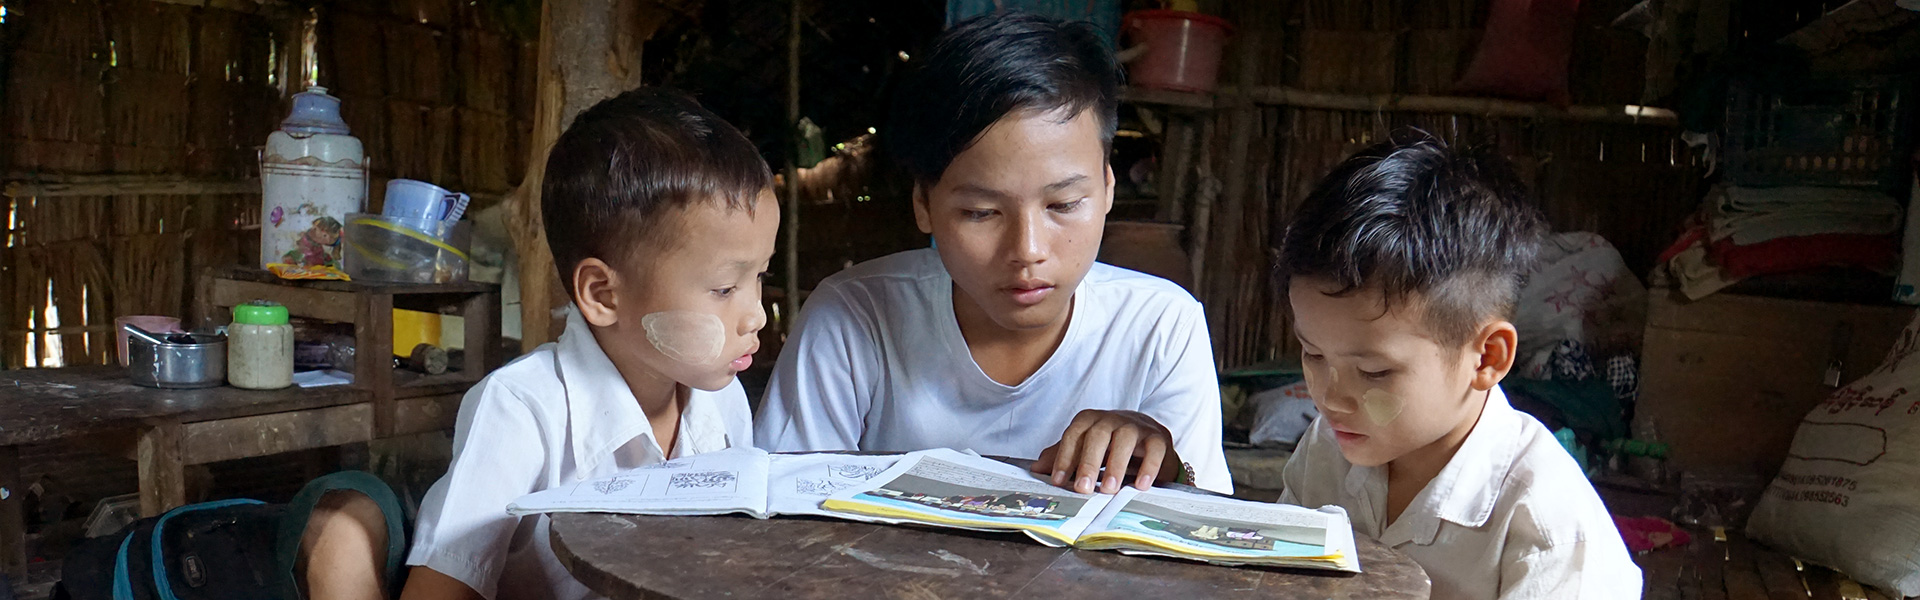 myanmar-brothers-homework-school-2